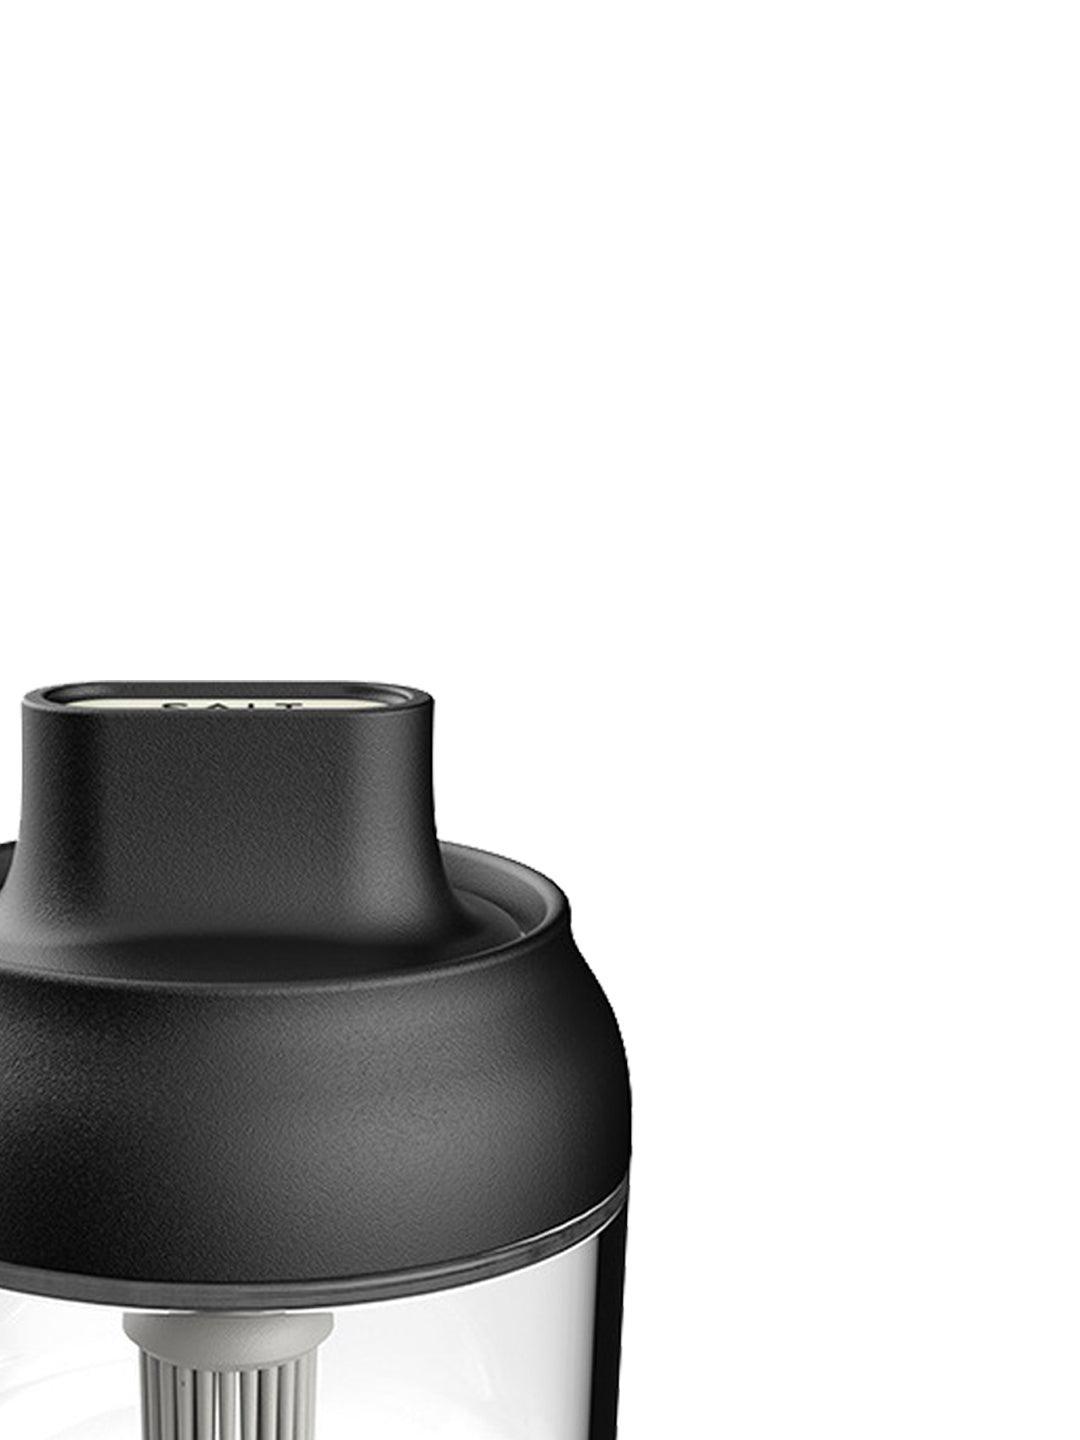 Market99 280Ml Oil Glass Jar With Brush - MARKET 99